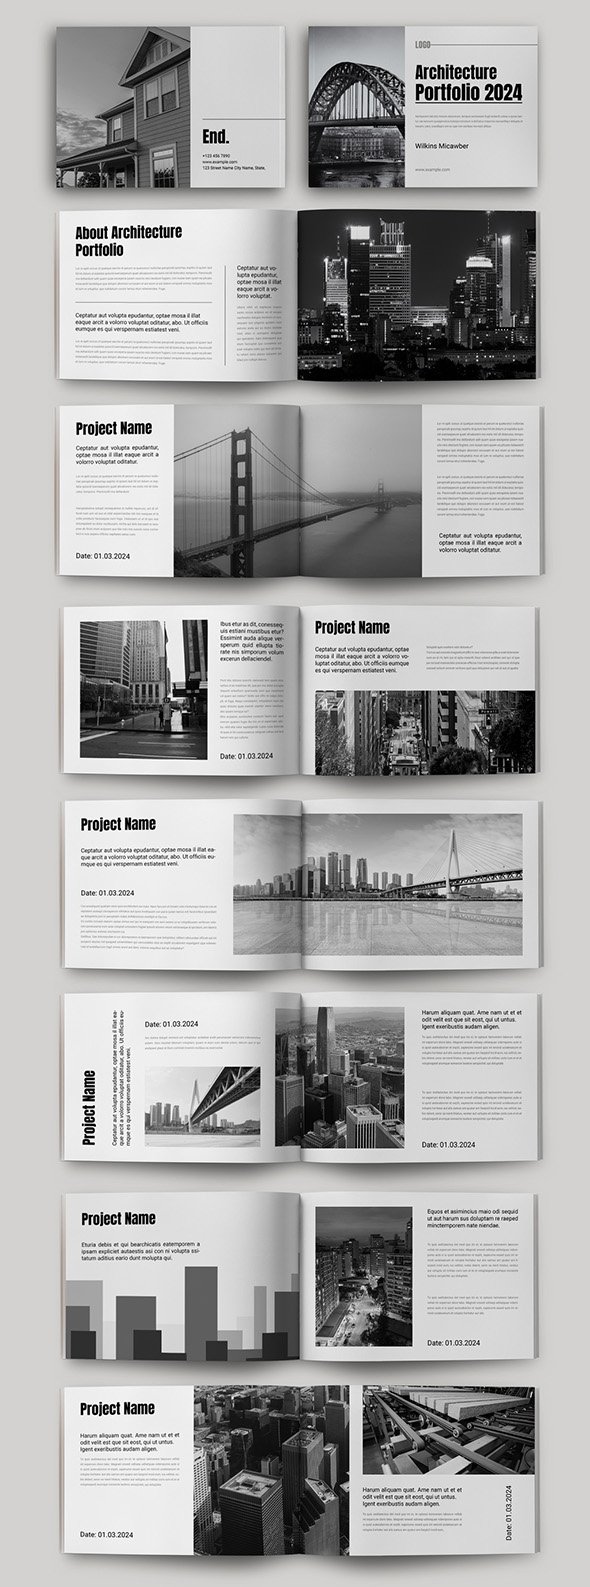 AdobeStock - Architecture Portfolio Layout - 723806256